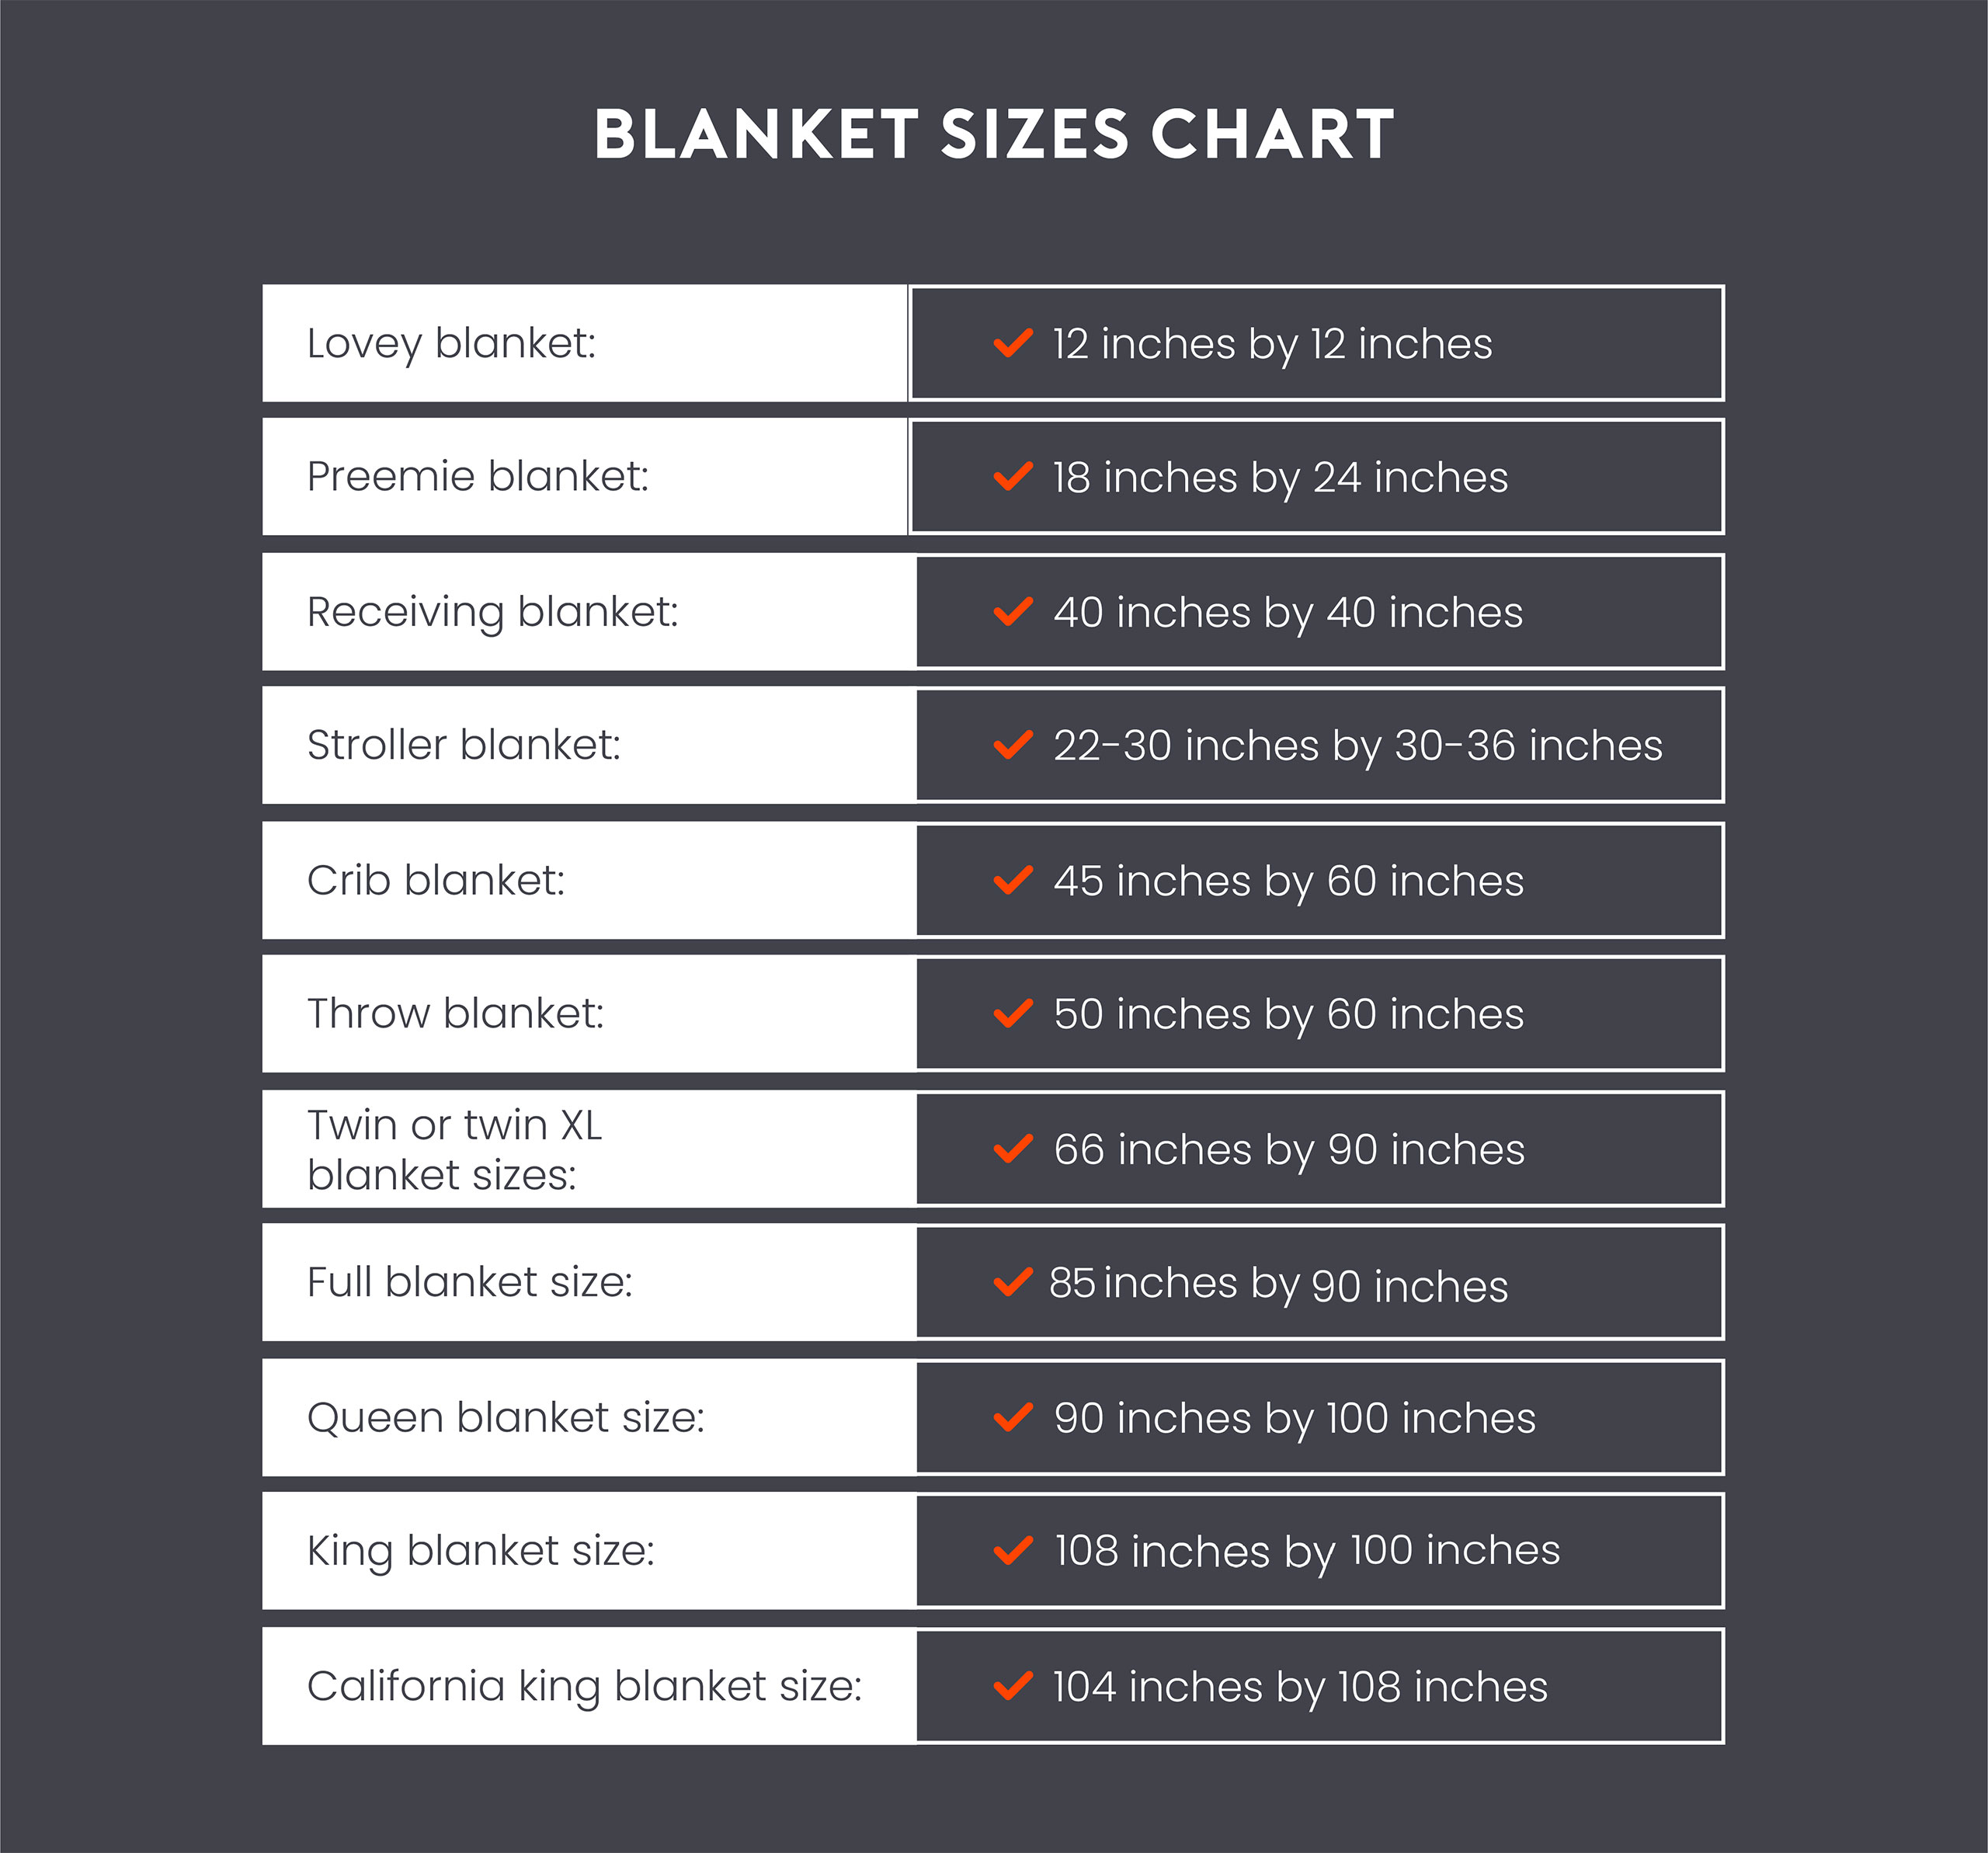 Blanket sizes chart